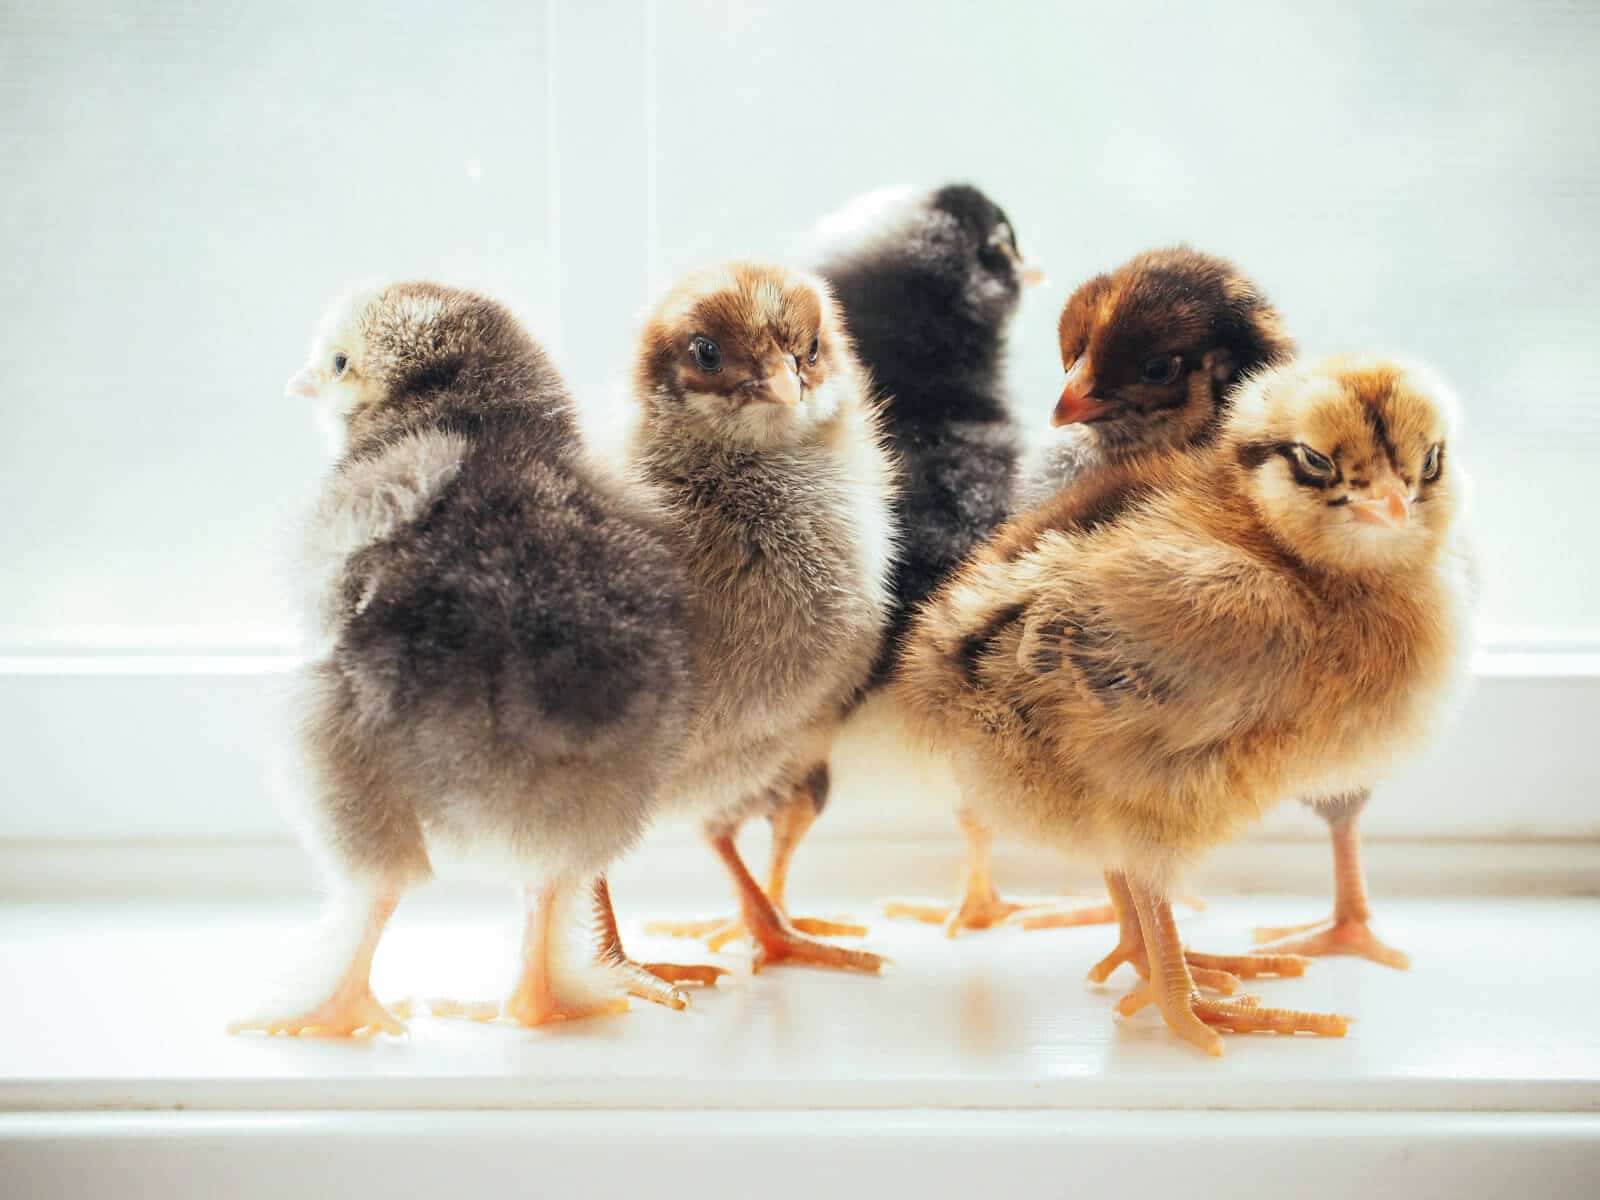 Baby chicks love homemade whole-grain chicken feed